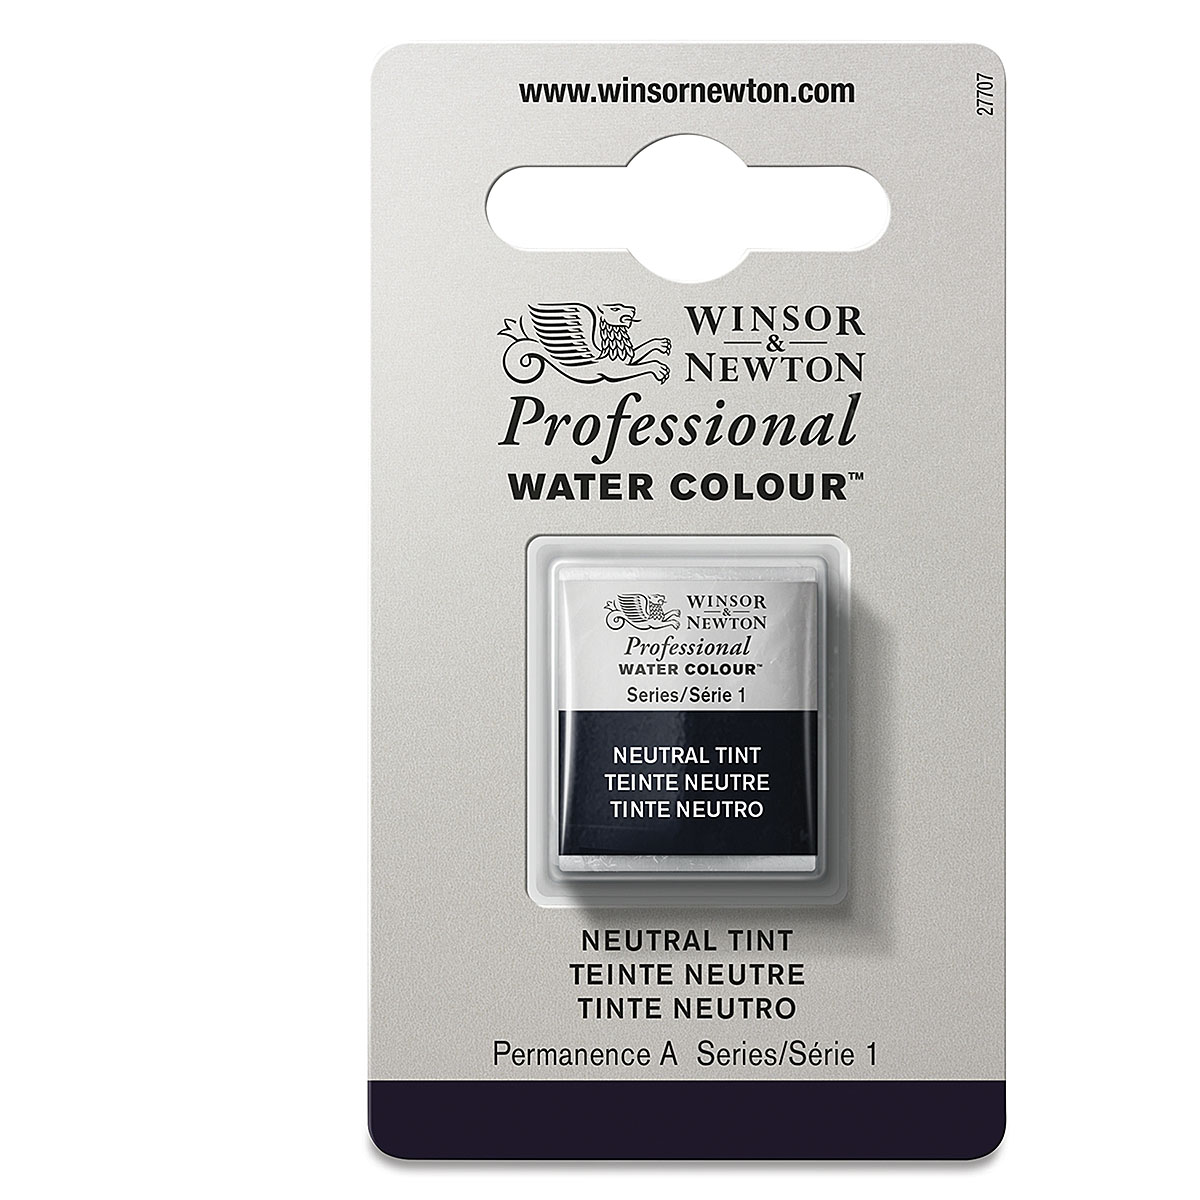 Winsor & Newton Professional Watercolor - Cadmium-Free Yellow Pale